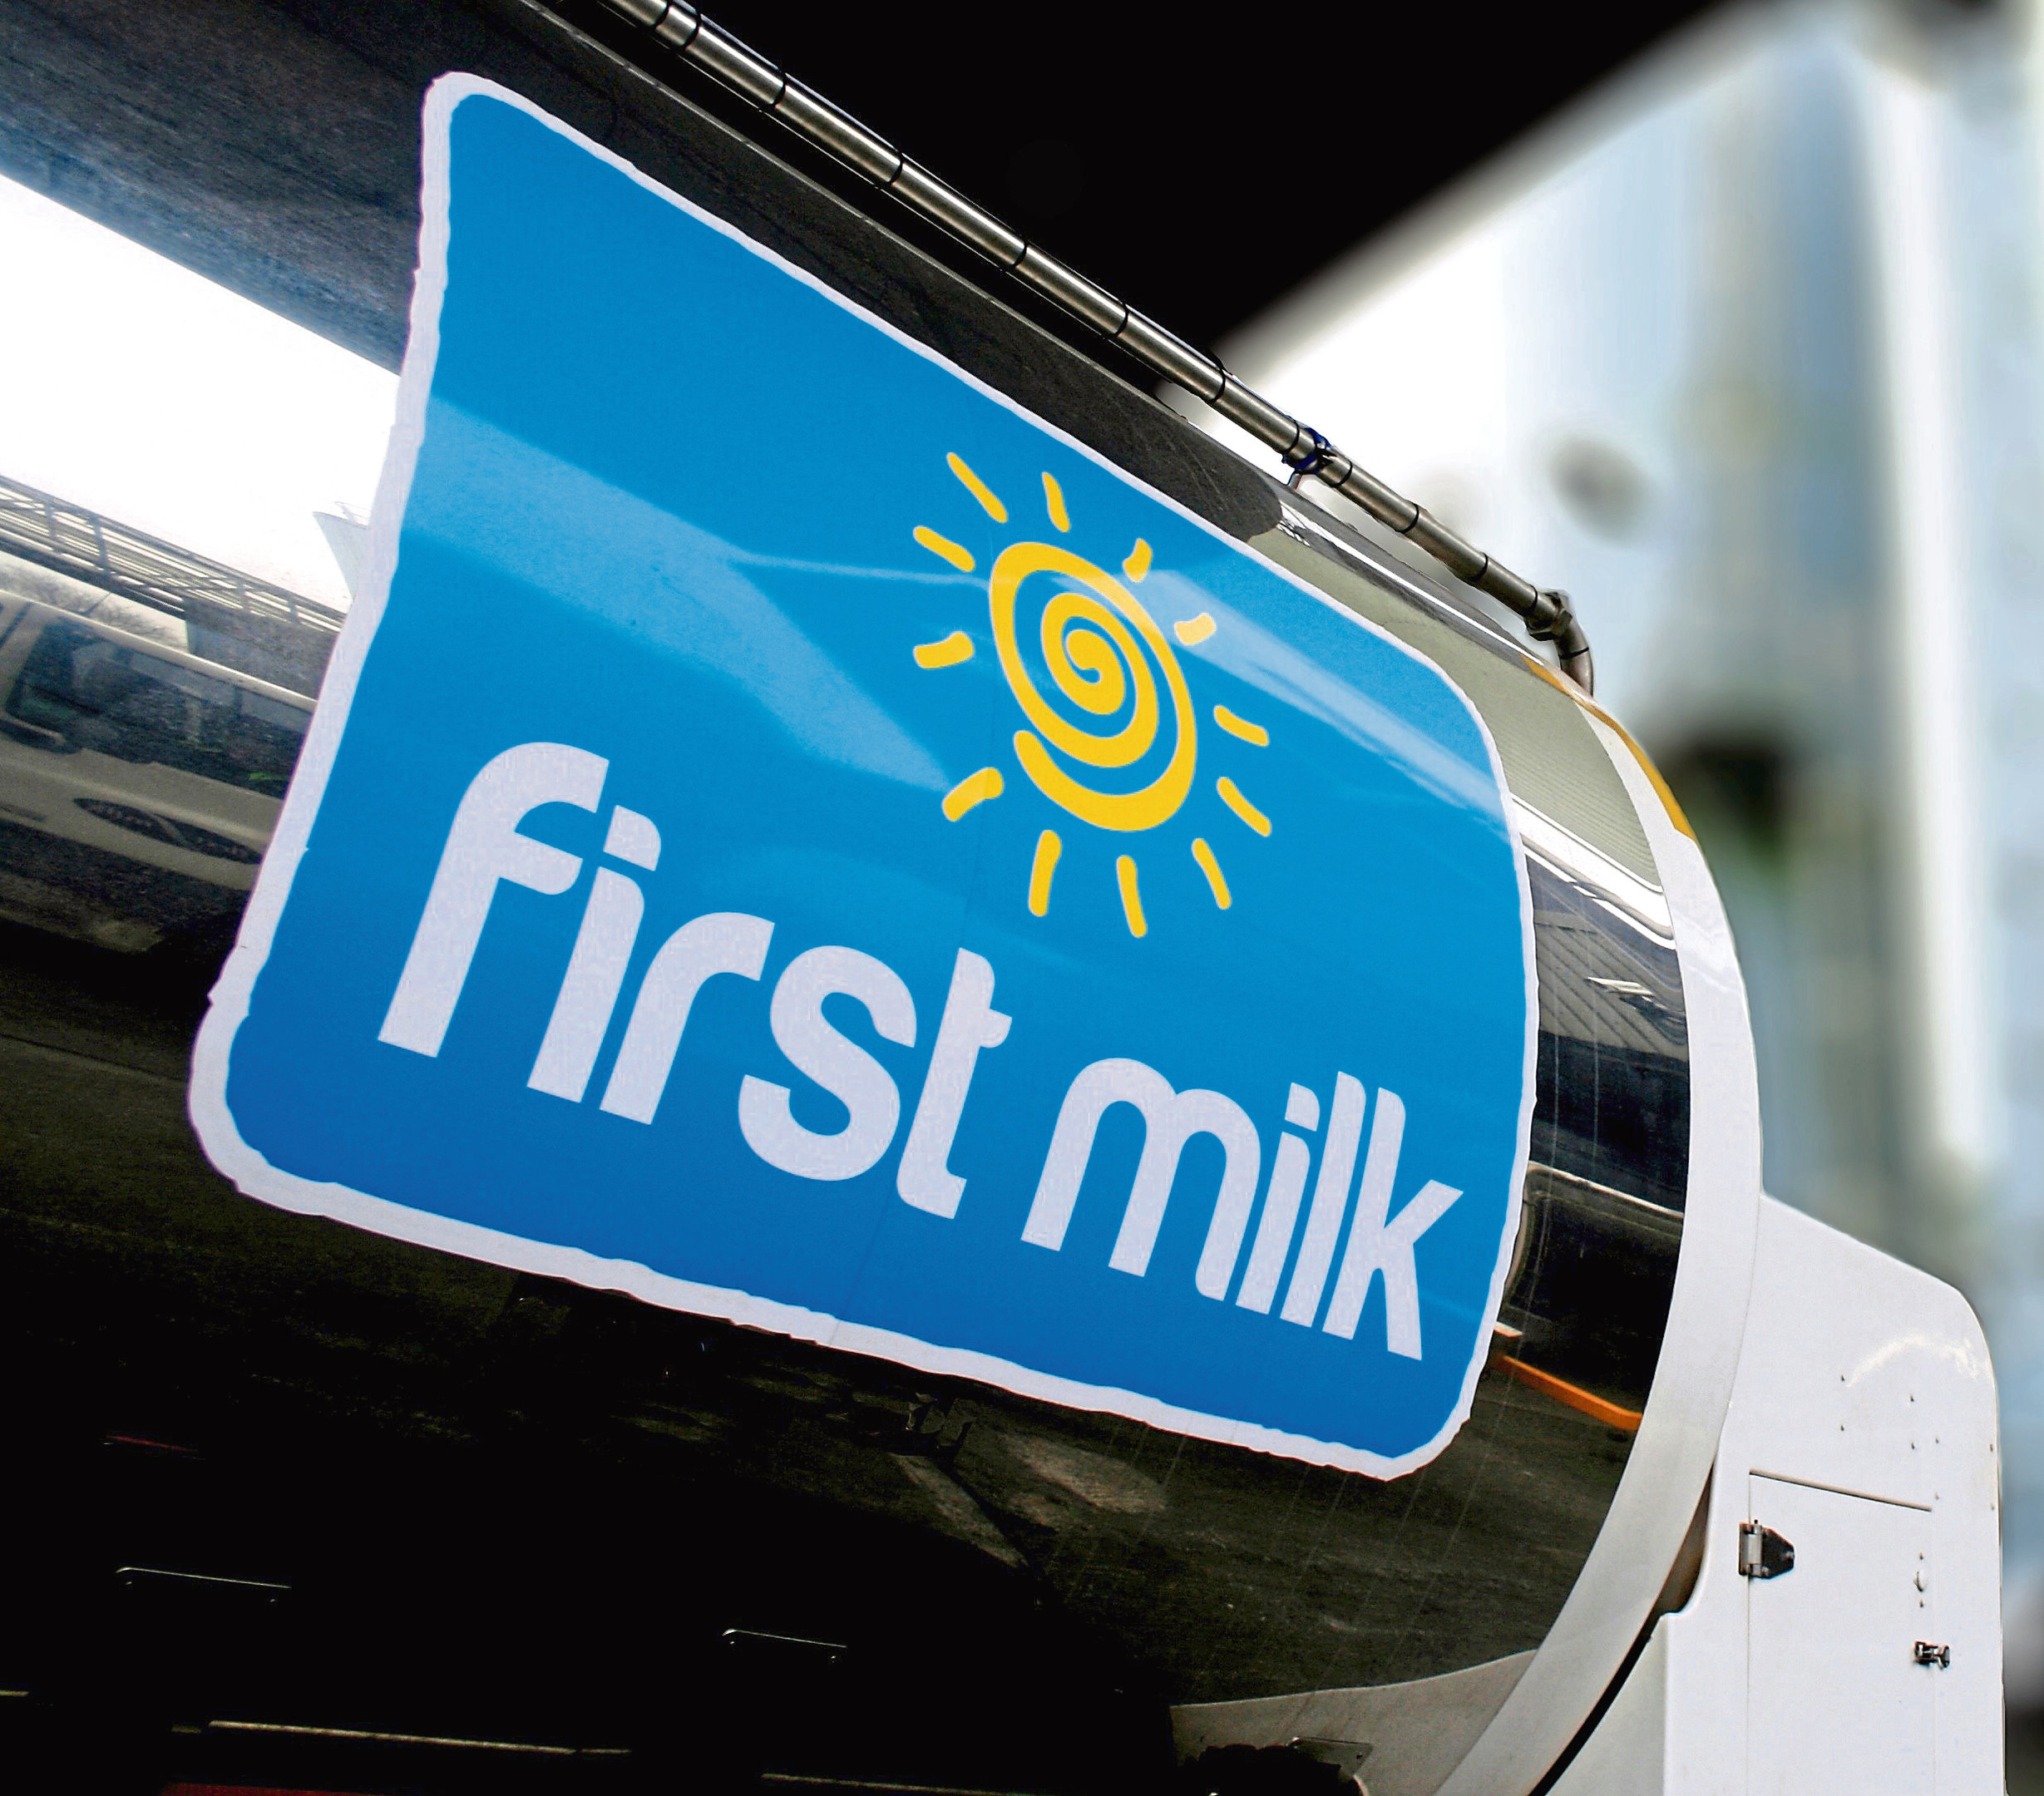 First Milk hailed a successful year.